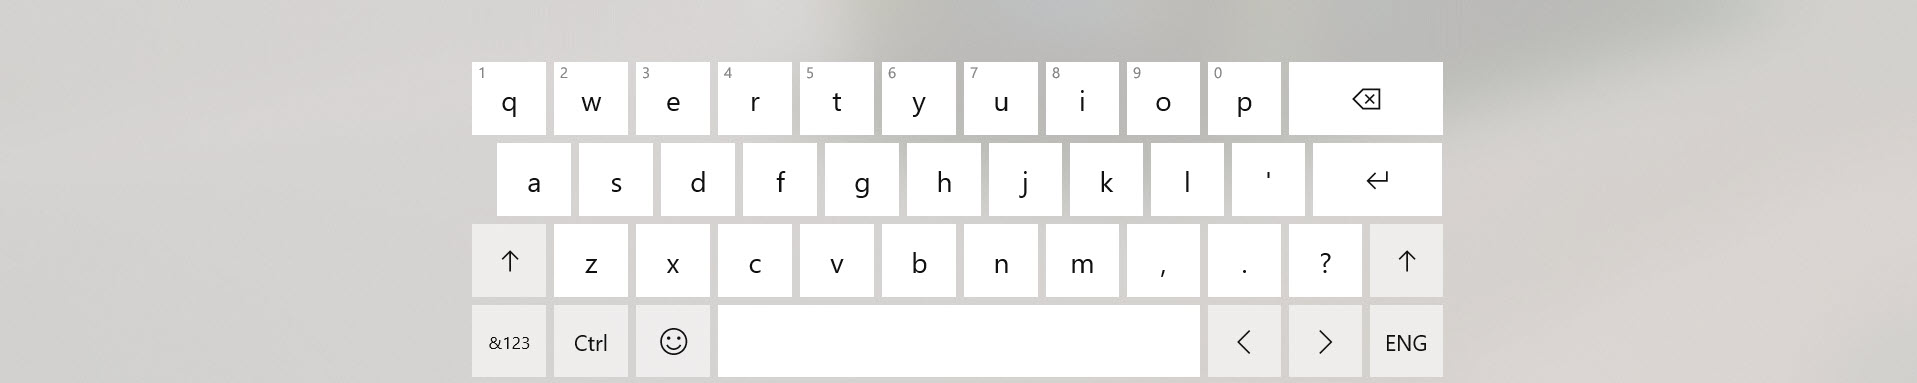 Cara Mengubah Bahasa Keyboard pada Windows 10 1